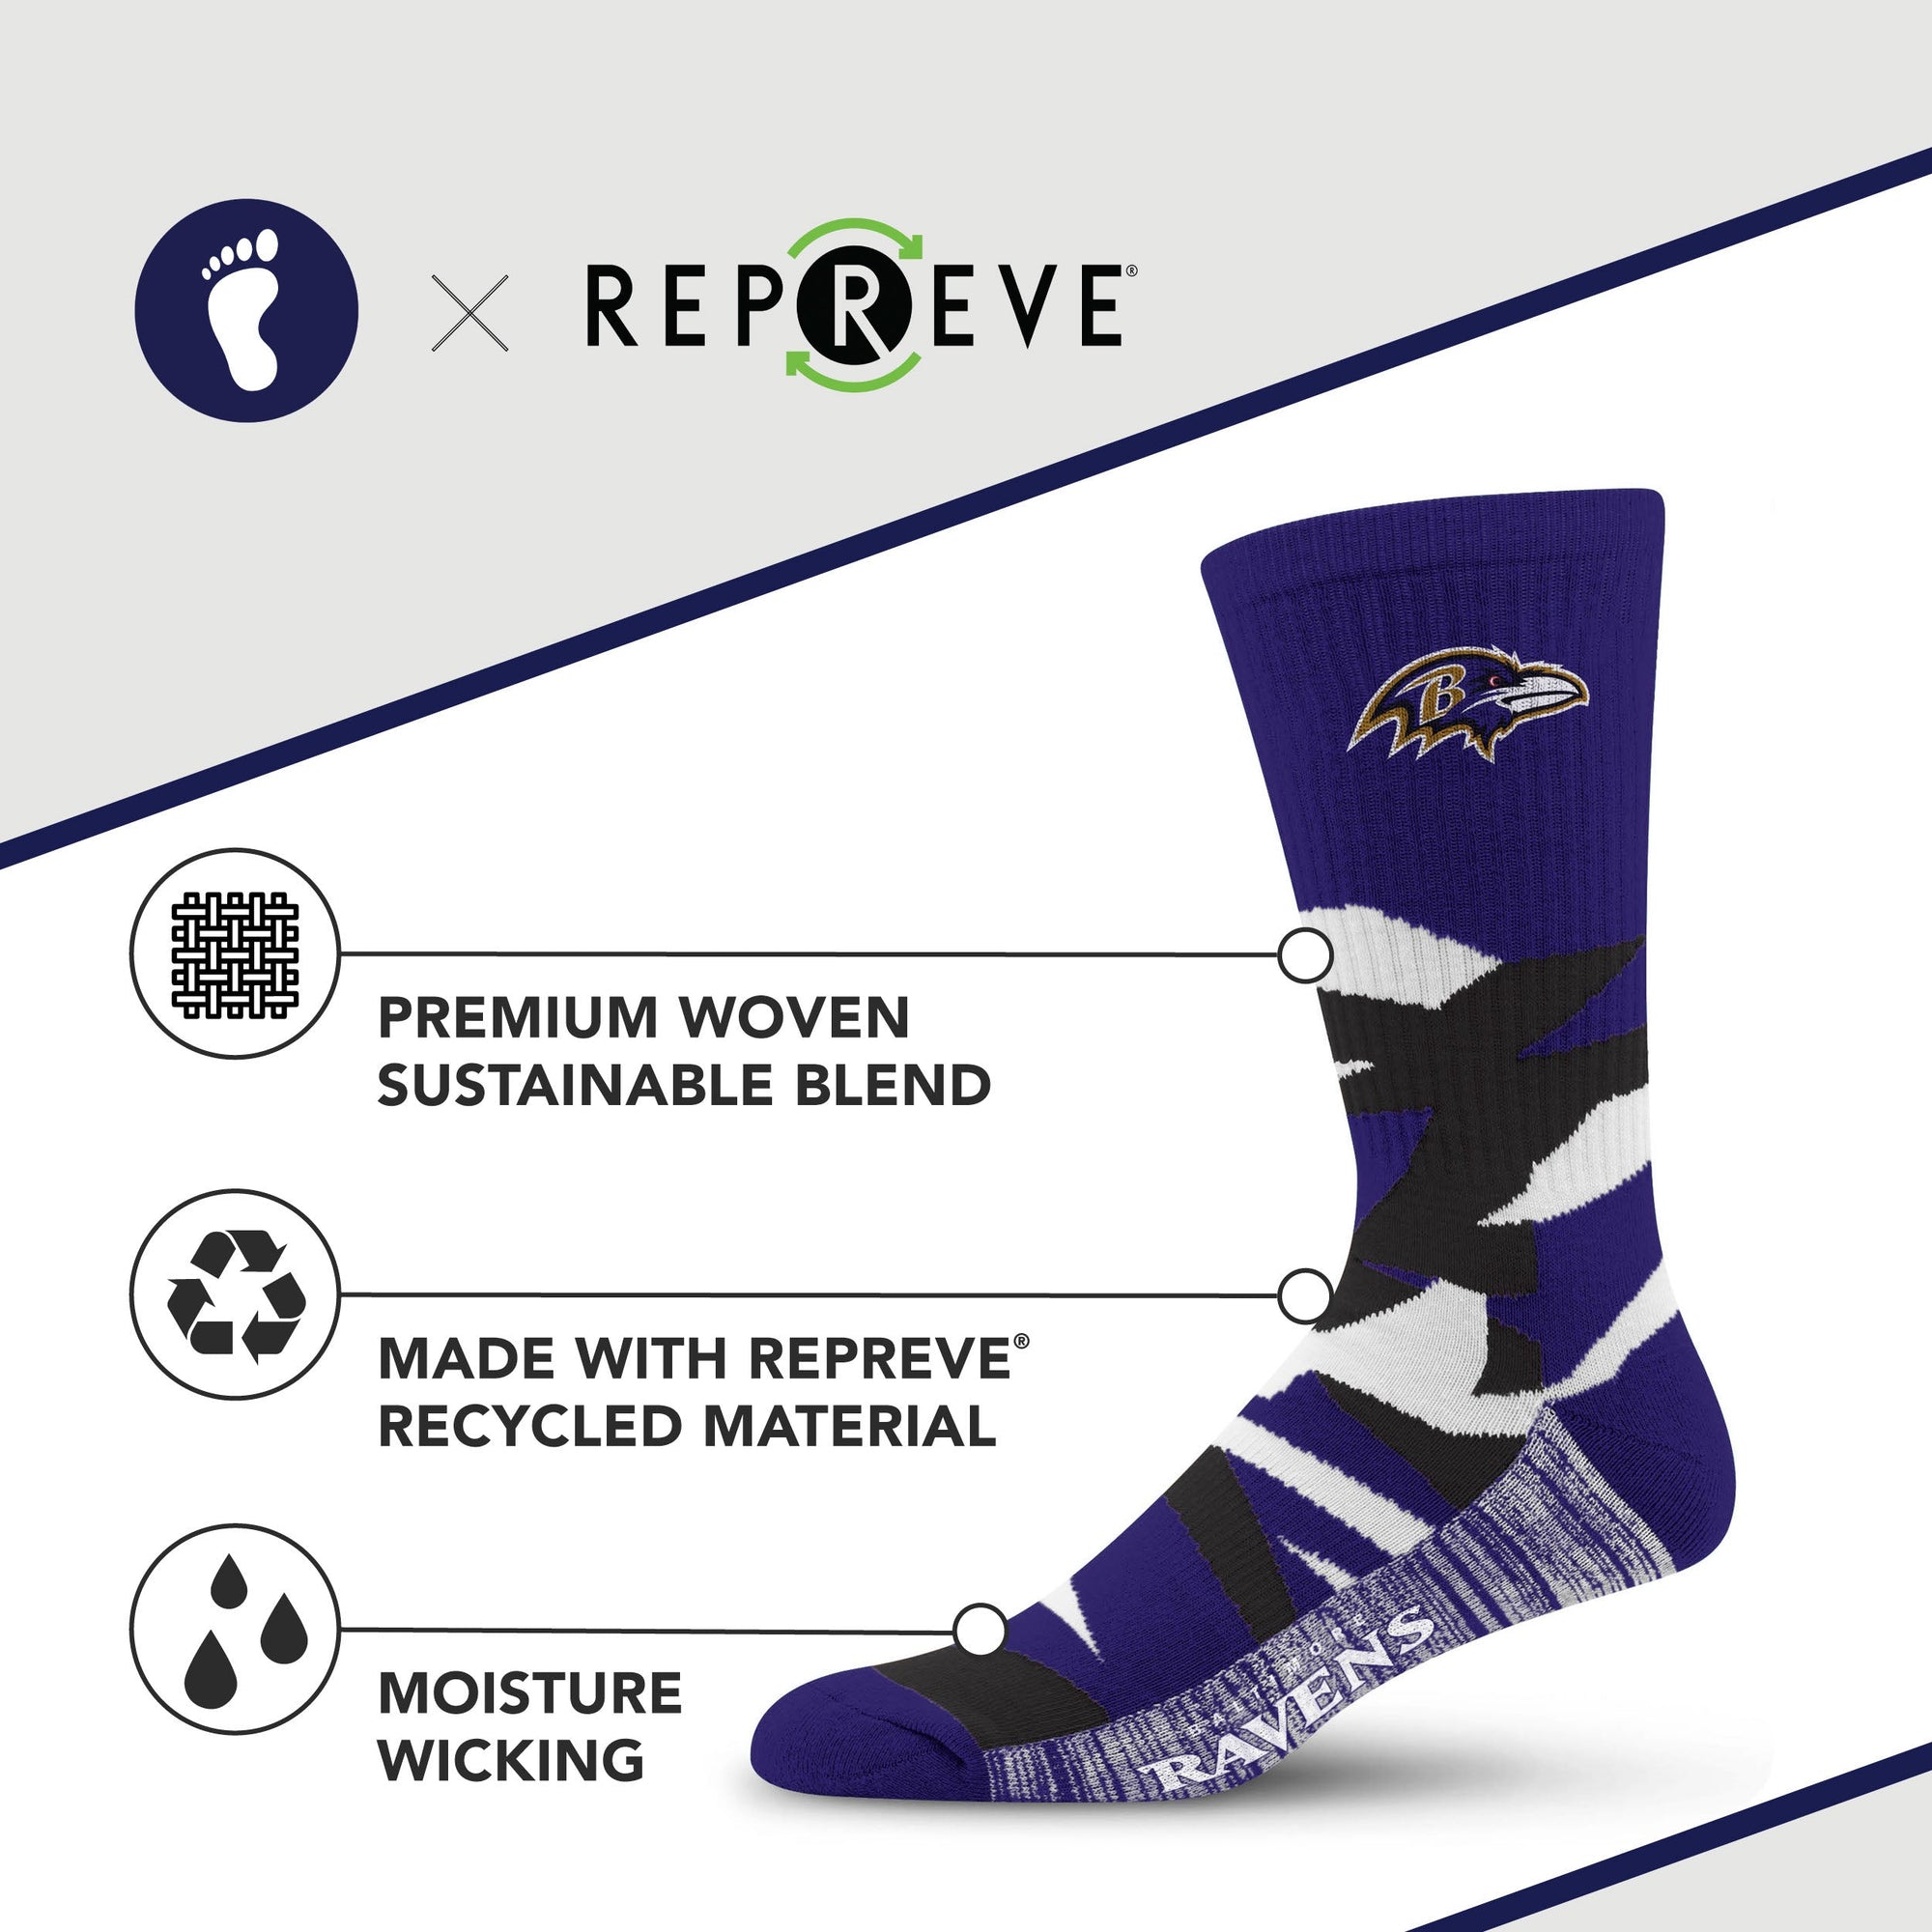 Baltimore Ravens Breakout Premium Crew Socks